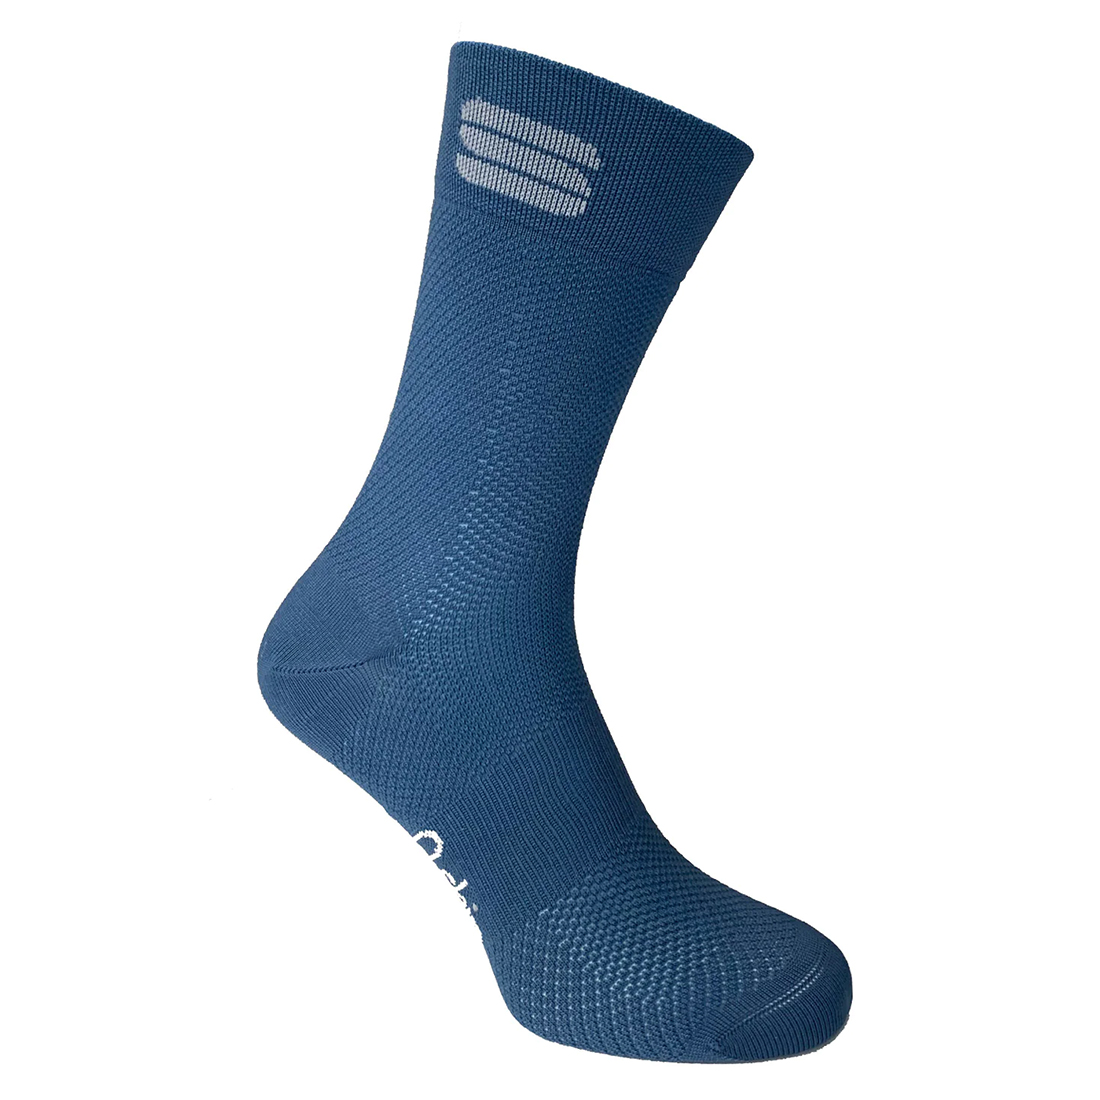 Sportful Matchy Socks In Blue - Beyond The Bike